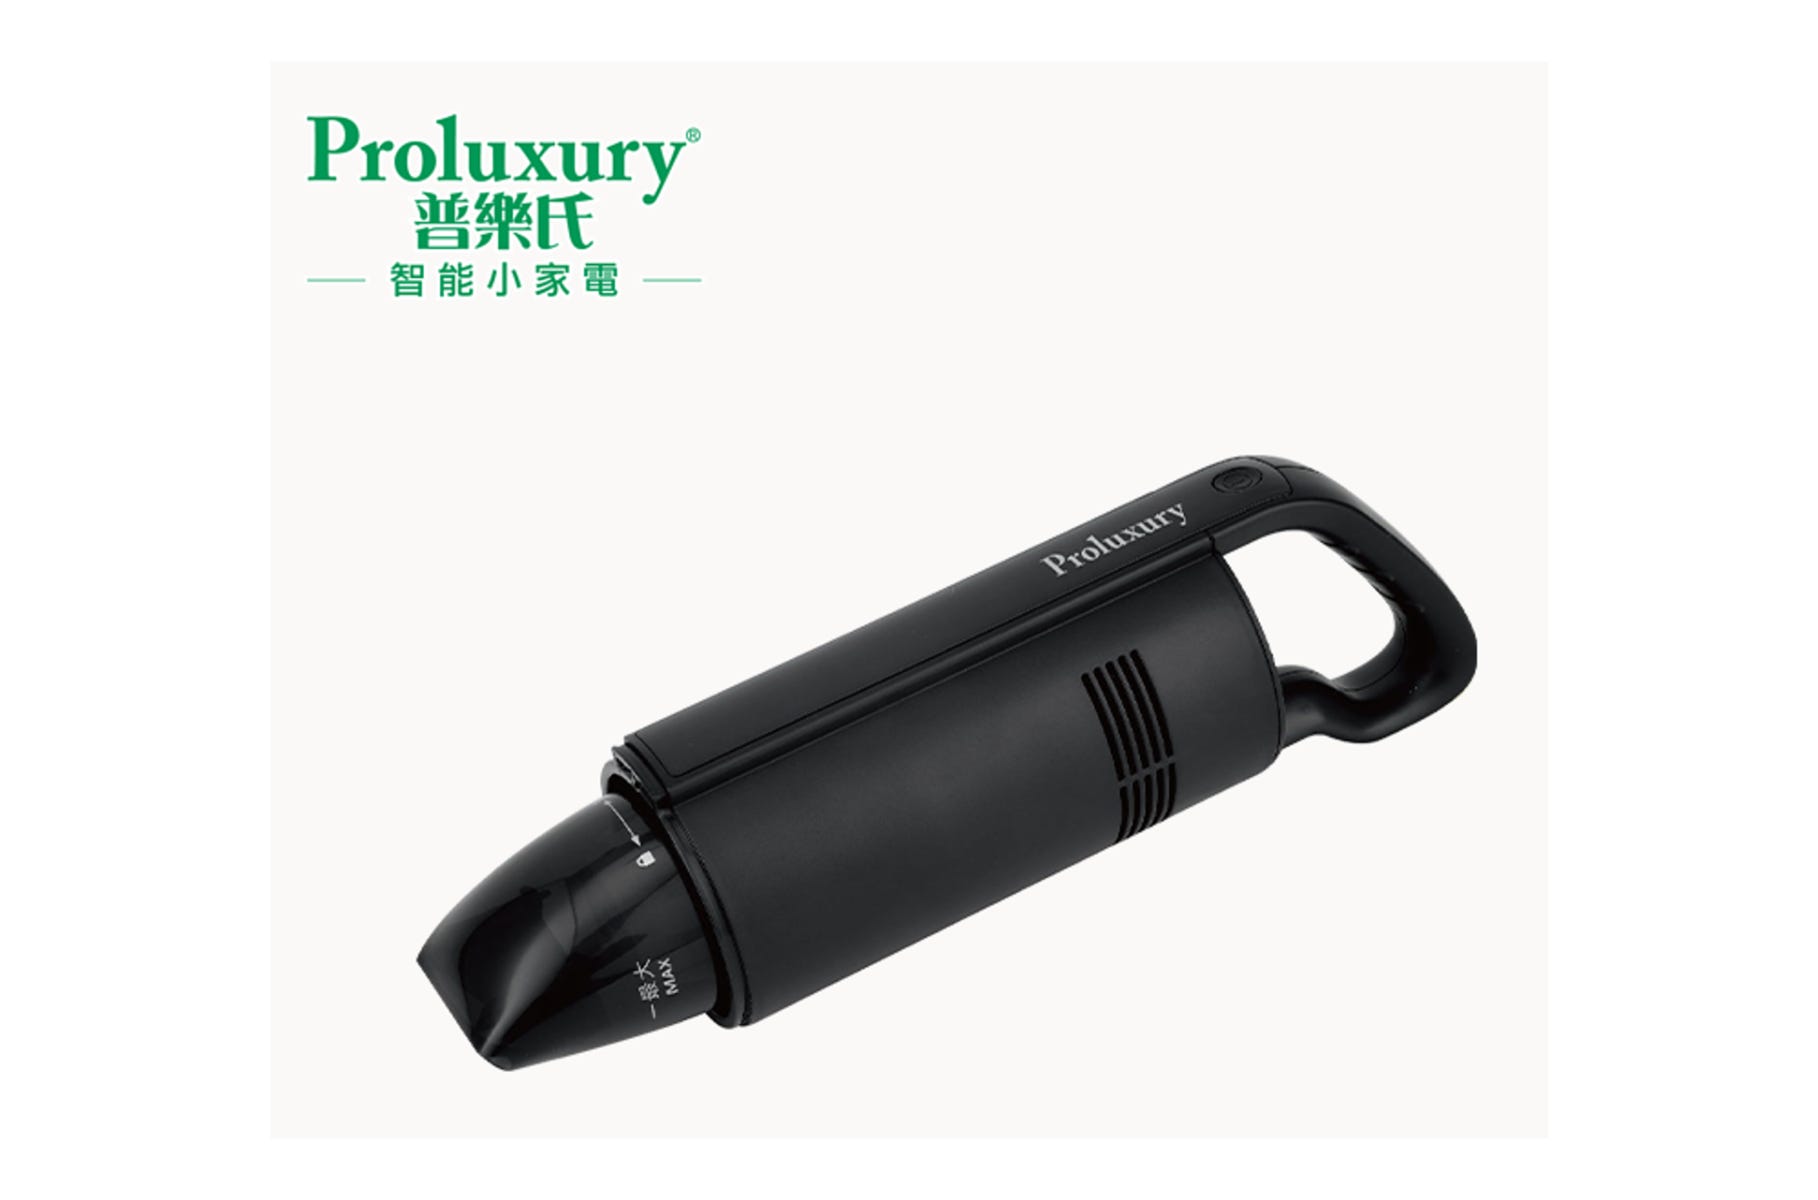 PVC401003 Proluxury USB Cordless Mini Vacuum Cleaner